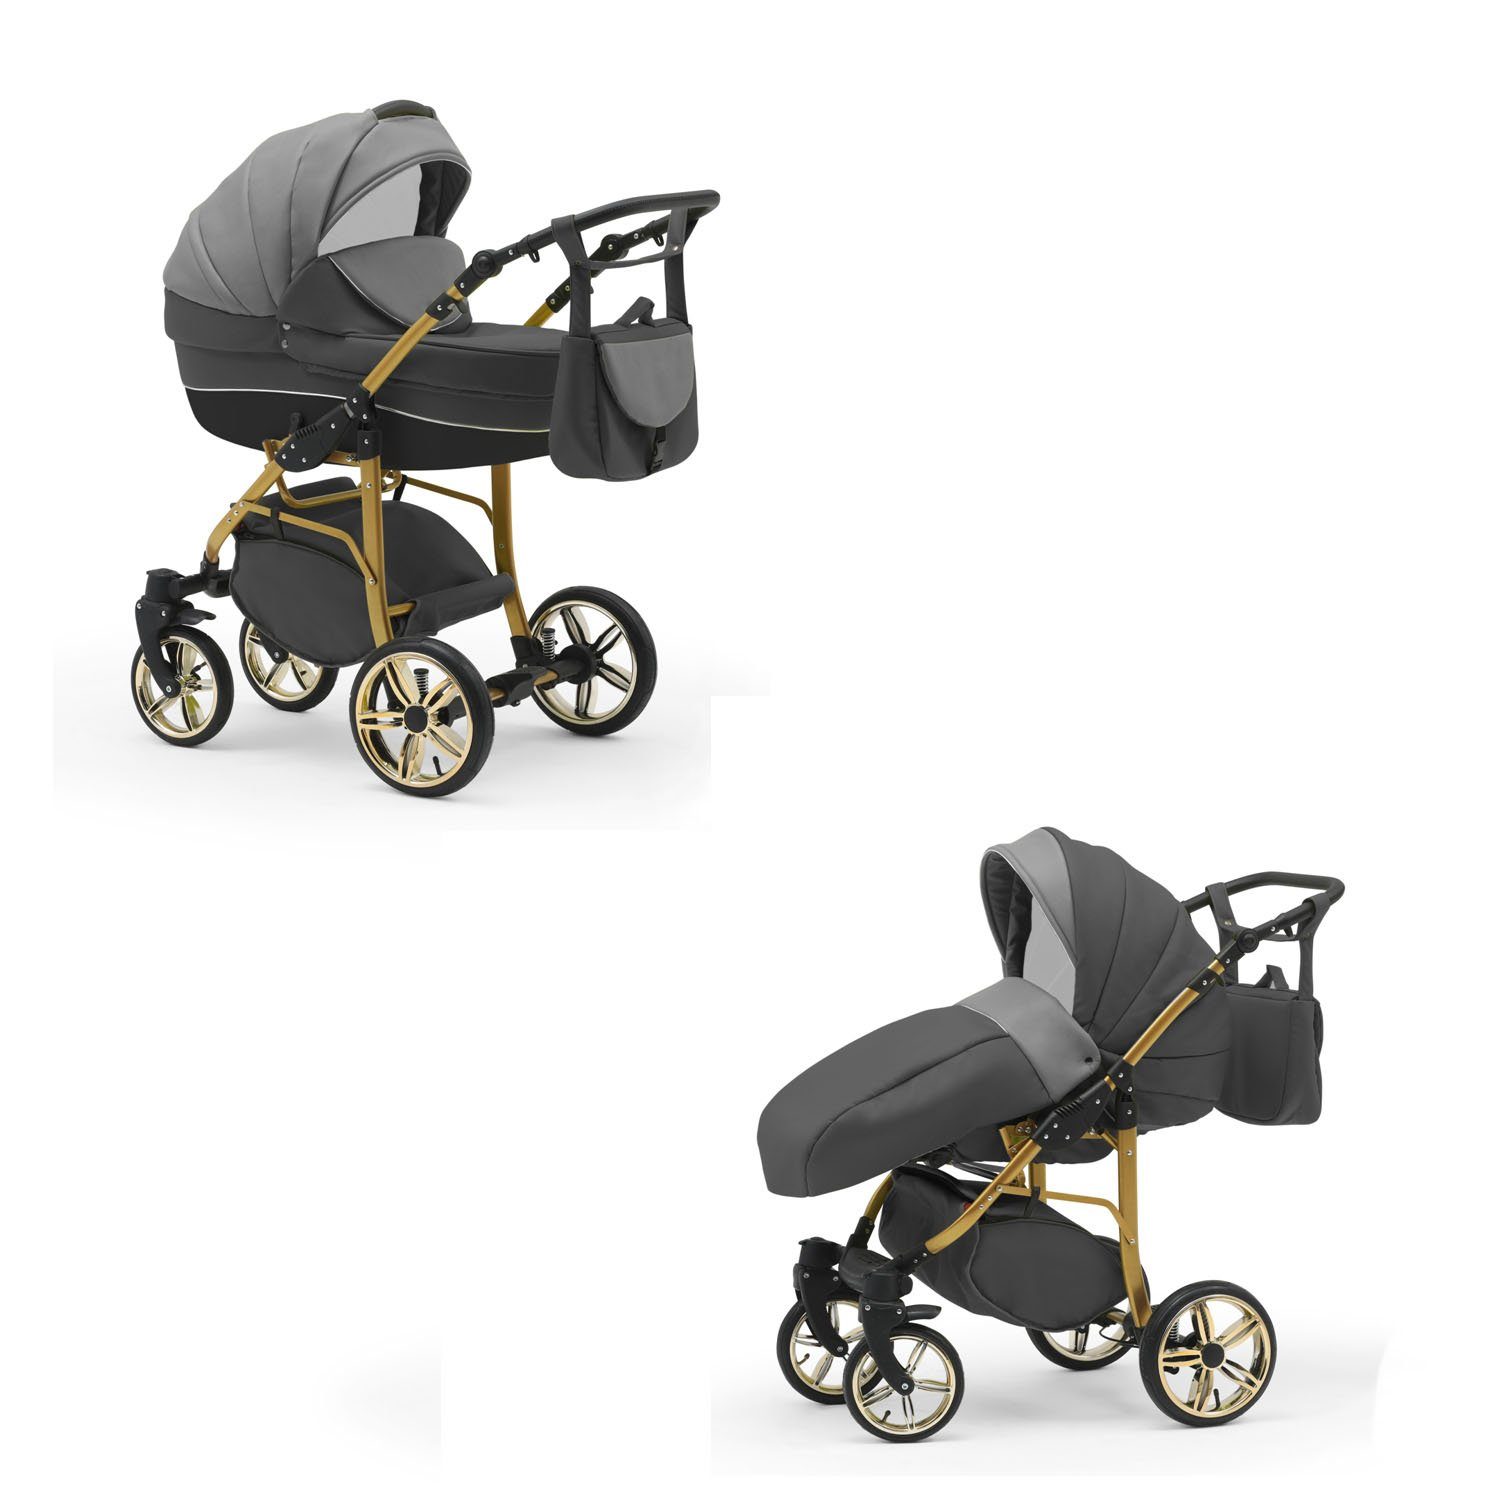 Grau-Dunkelgrau Gold - ECO Kombi-Kinderwagen Cosmo babies-on-wheels Farben in Kinderwagen-Set - 13 2 1 46 Teile in